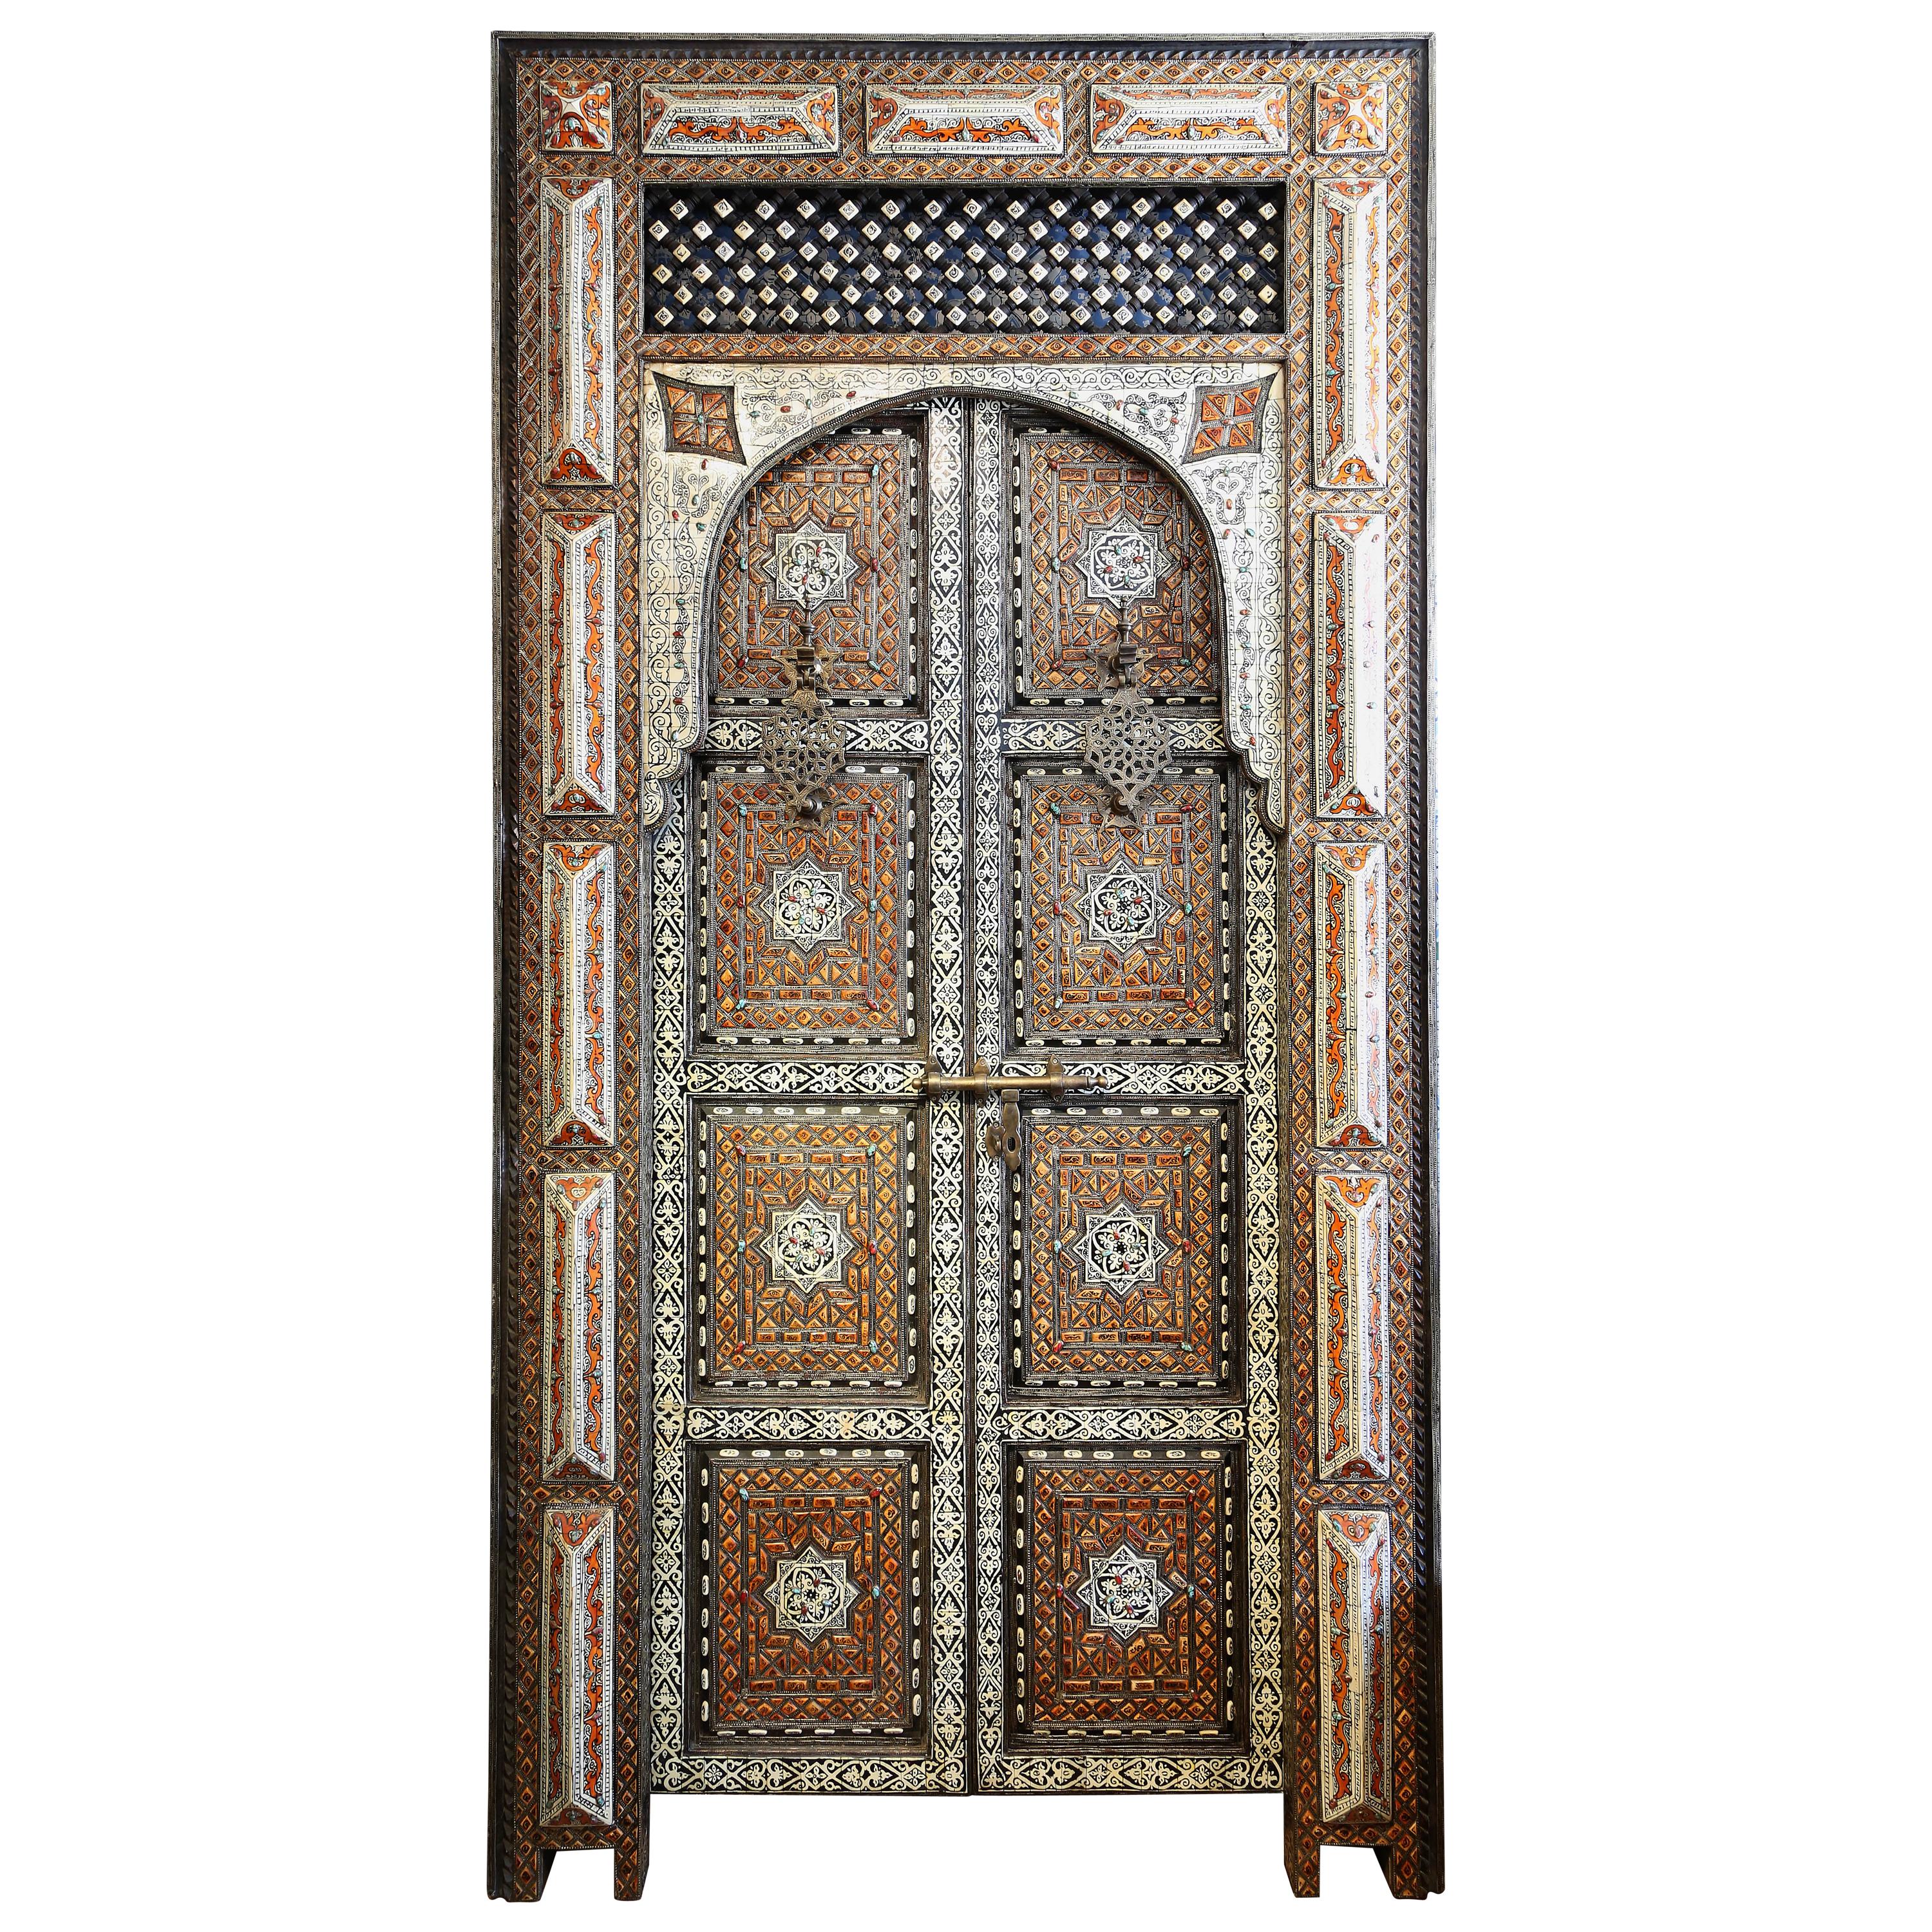 Exquisite Moroccan Palace Door with Camel Bone and Semi Precious Stones